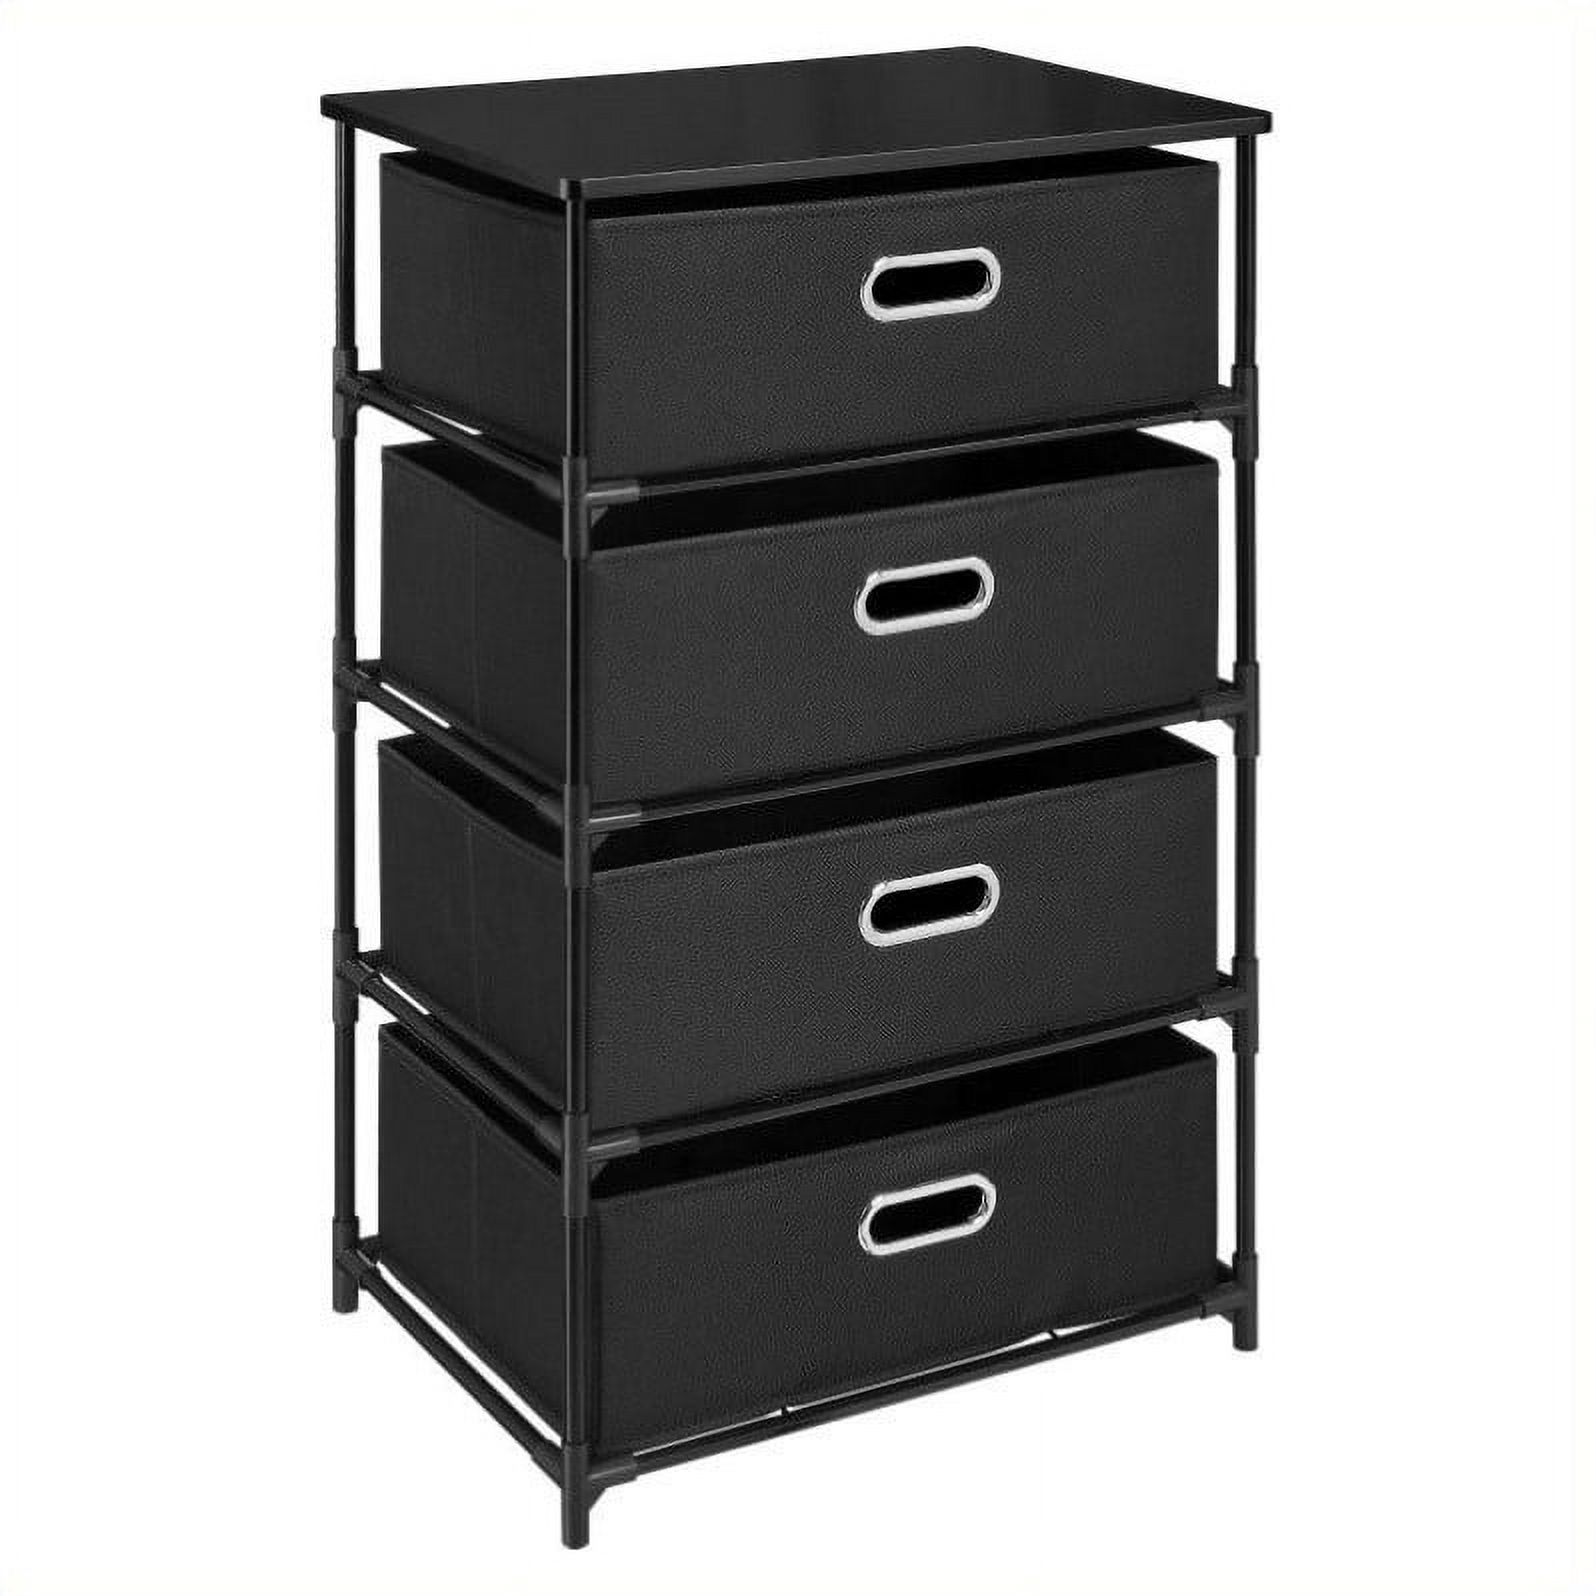 Altra Furniture 4 Bin Storage End Table in Black - image 1 of 3